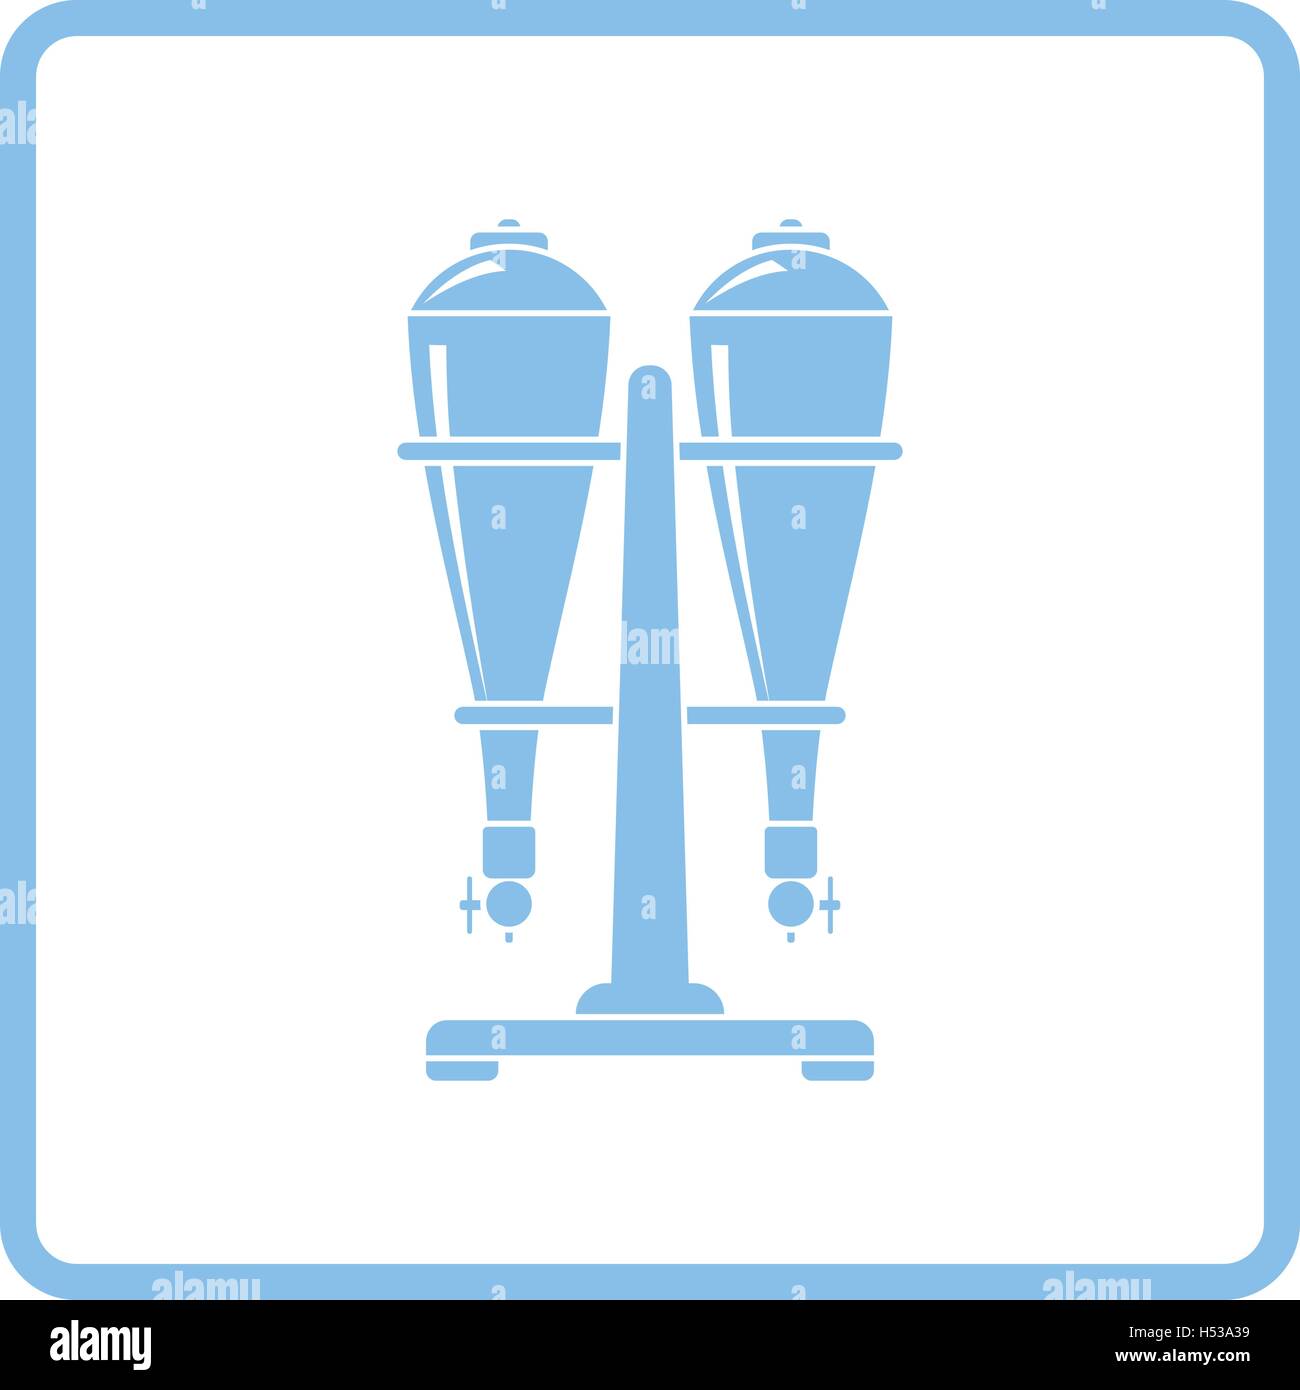 Soda siphon equipment icon. Blue frame design. Vector illustration. Stock Vector